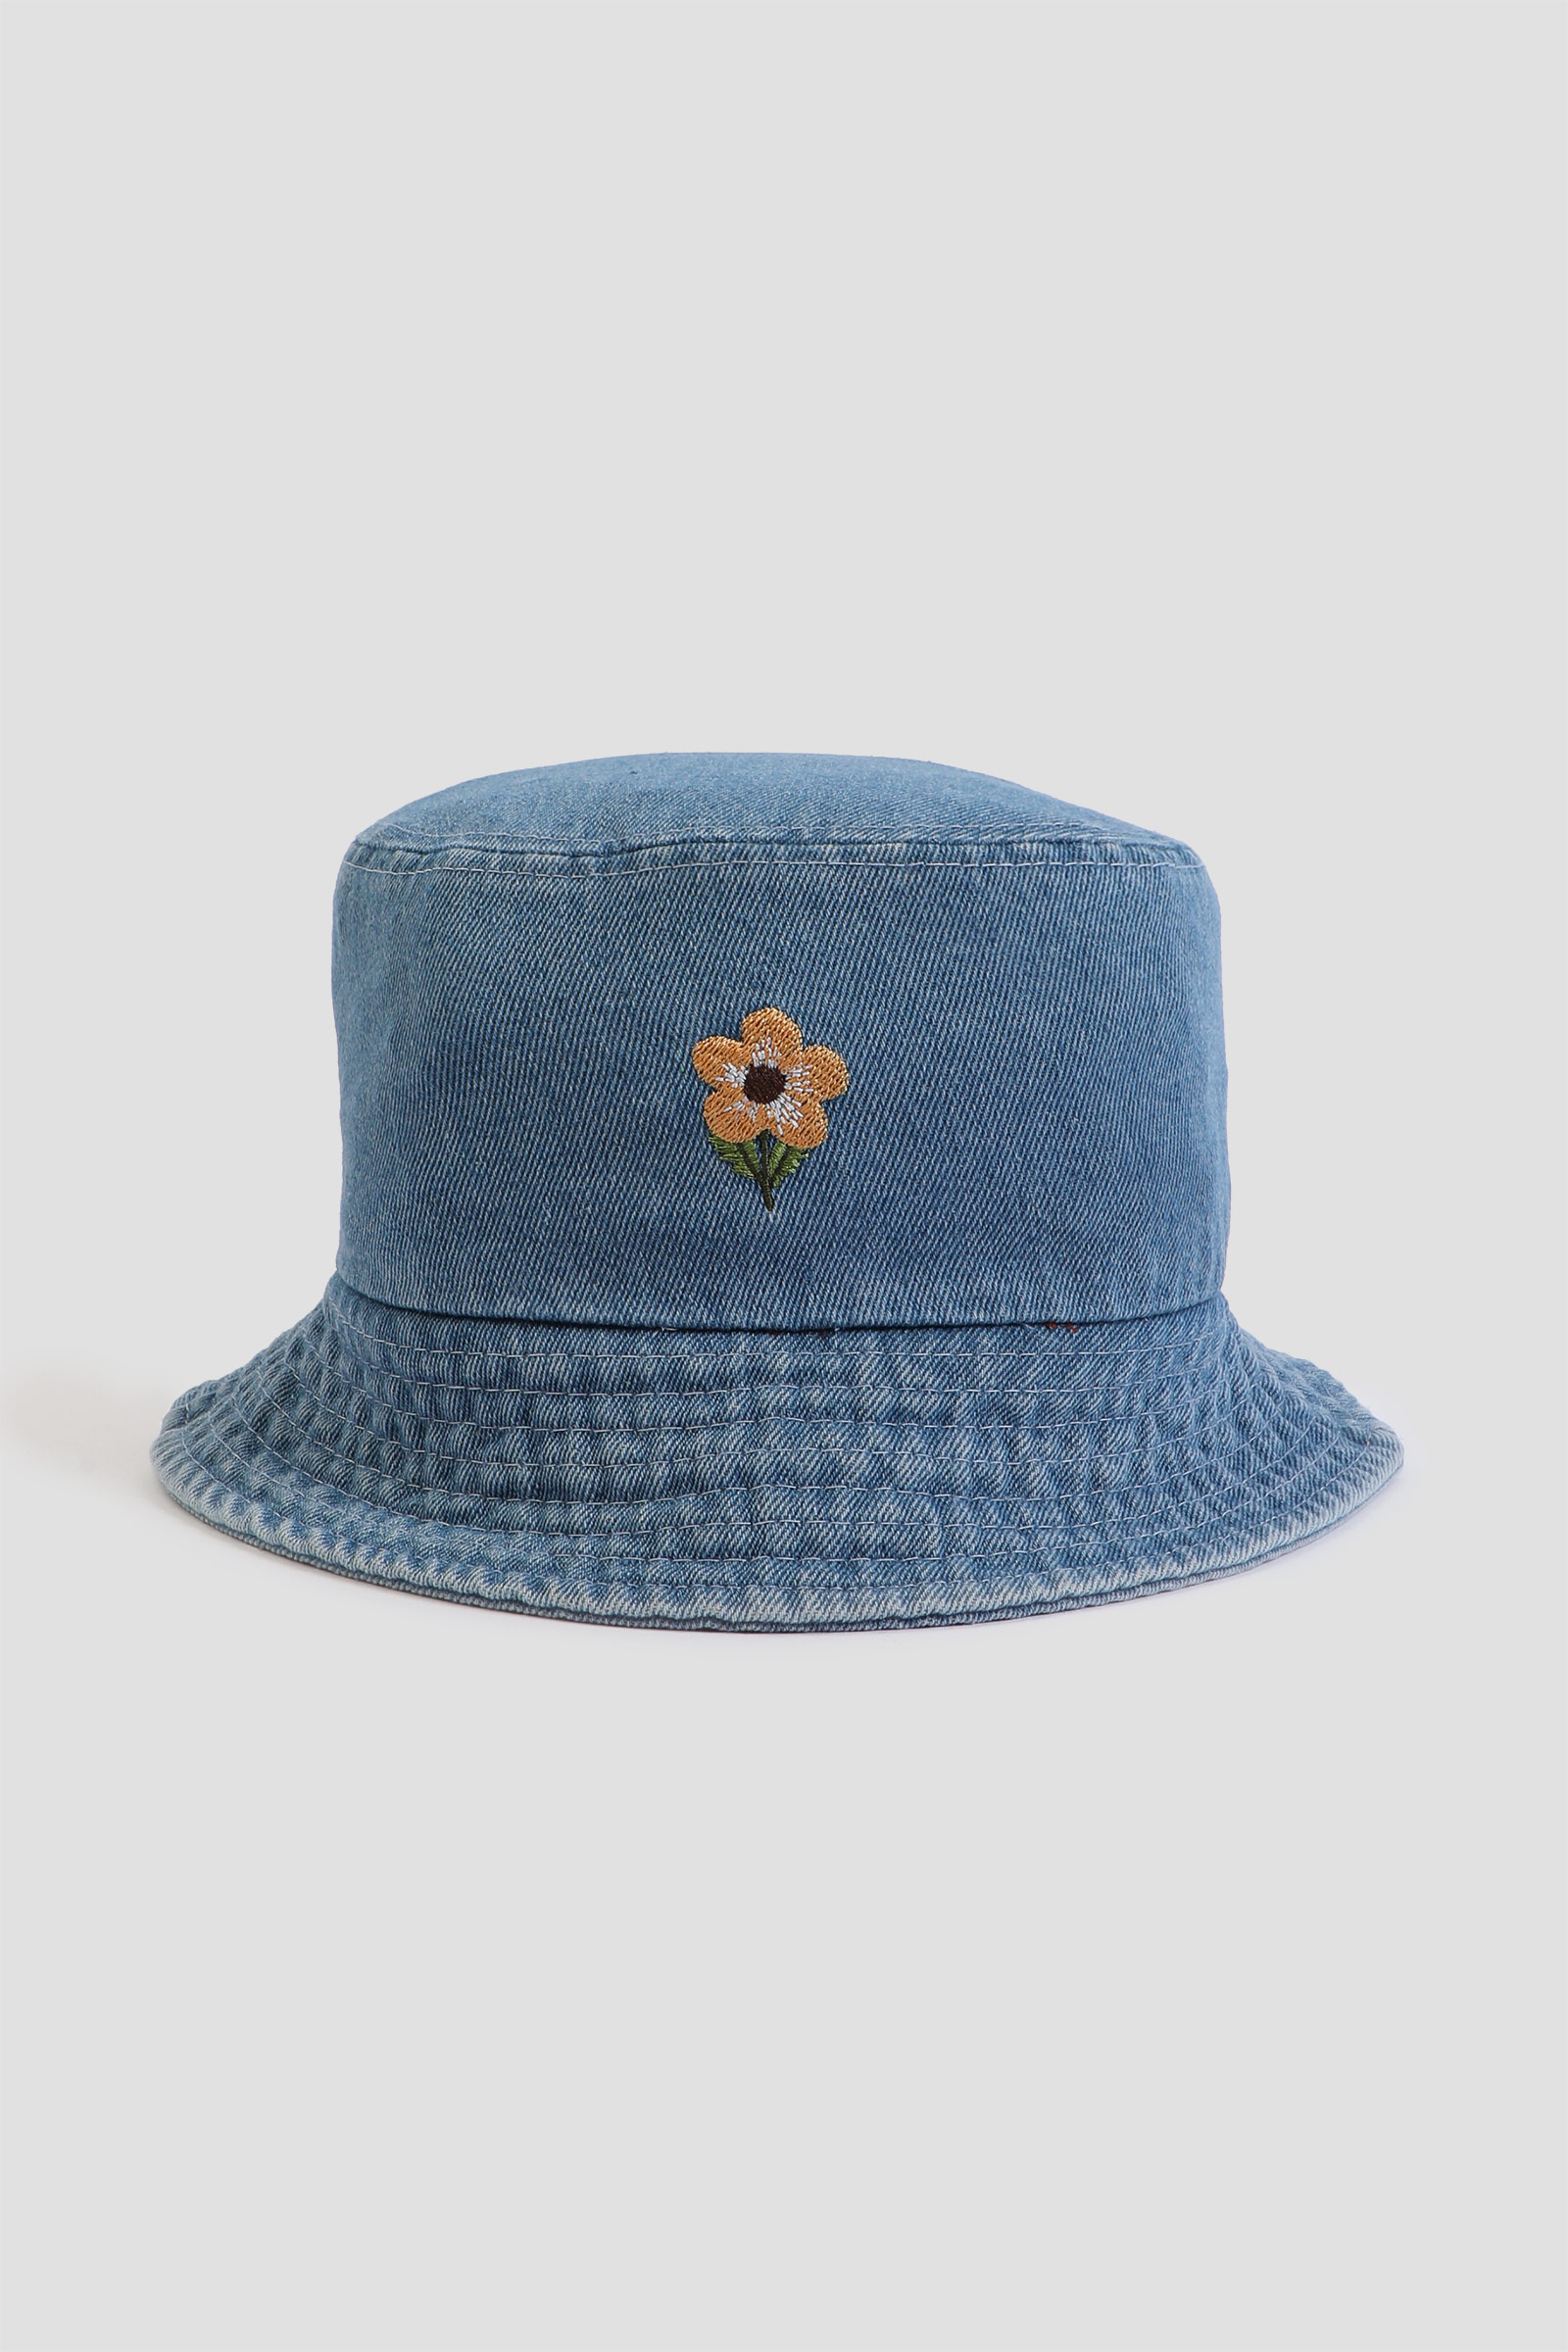 Ardene Daisy Denim Bucket Hat in Medium Blue